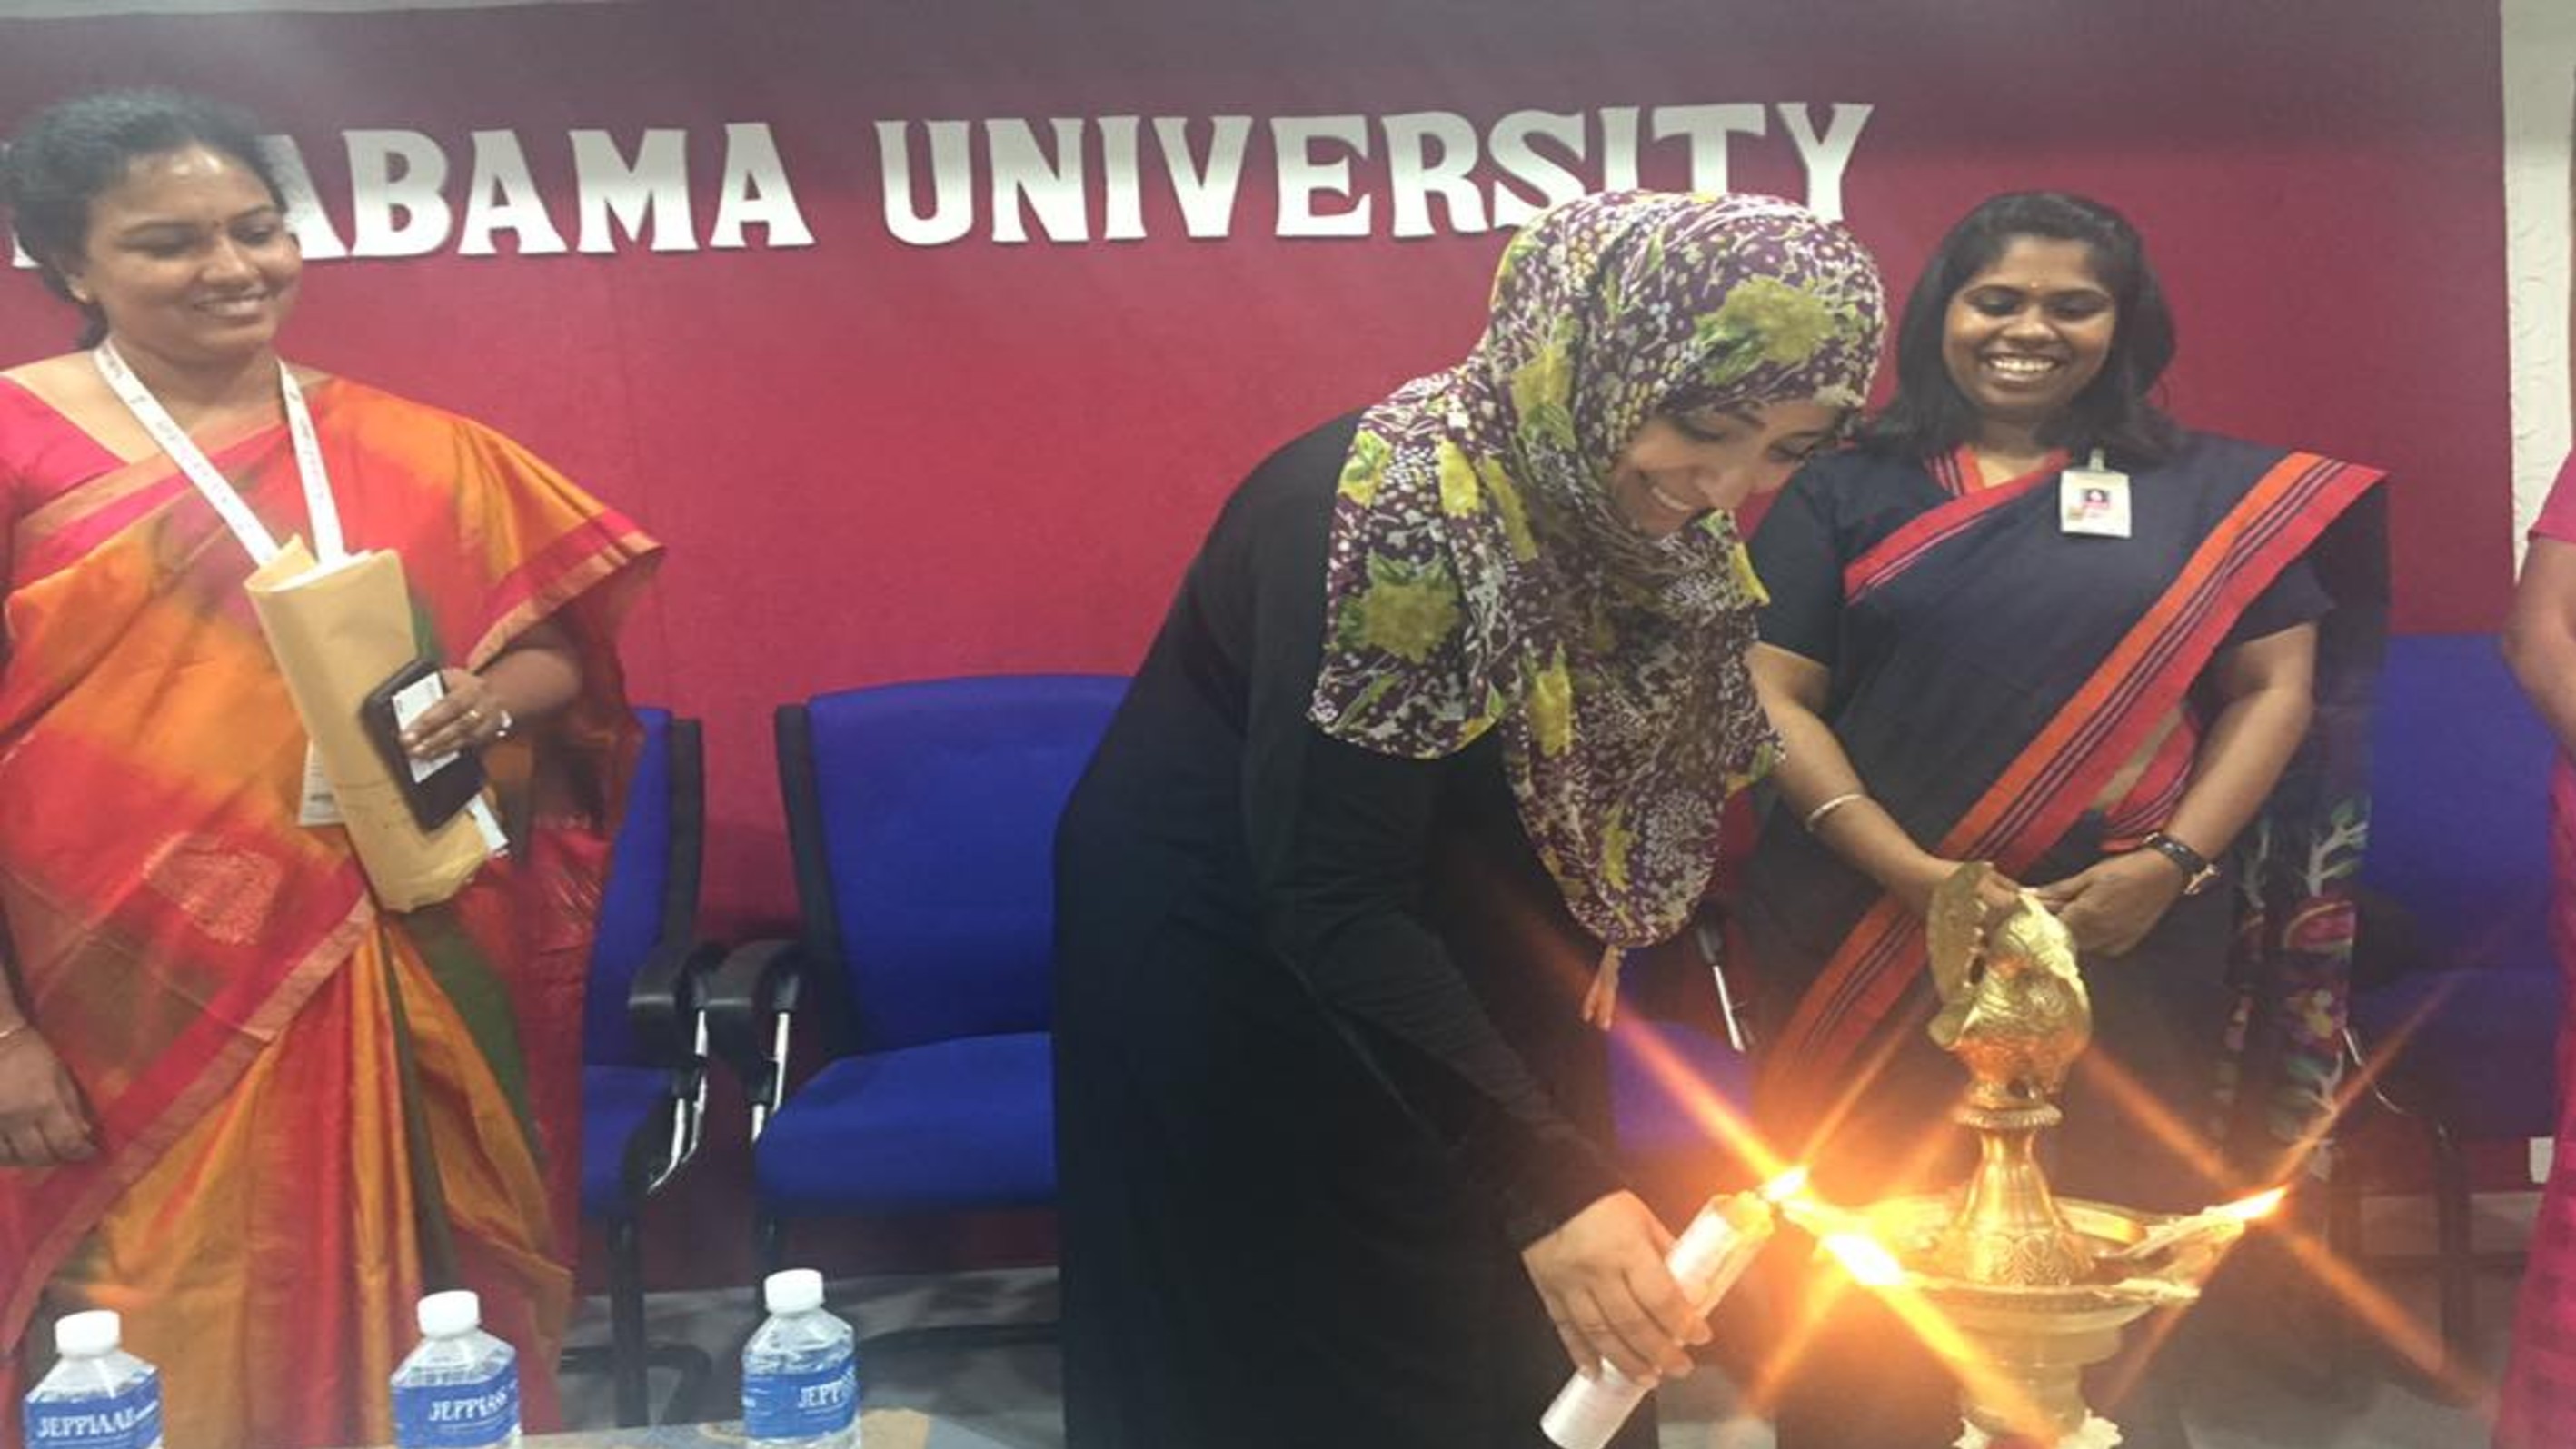 Tawakkol Karman lectures at an Indian university on the empowerment of women